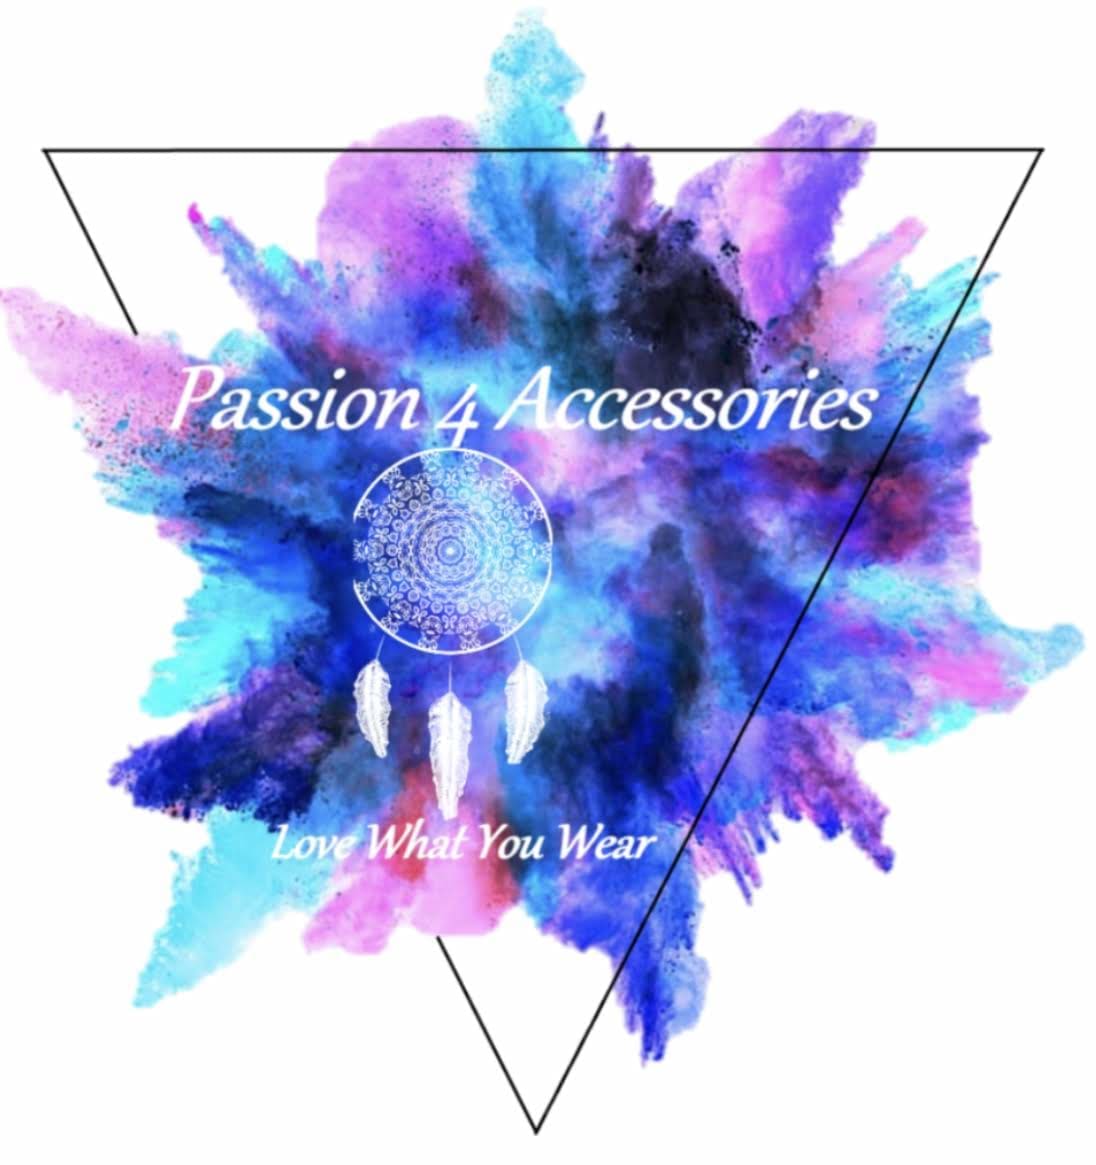 Passion 4 Accessories